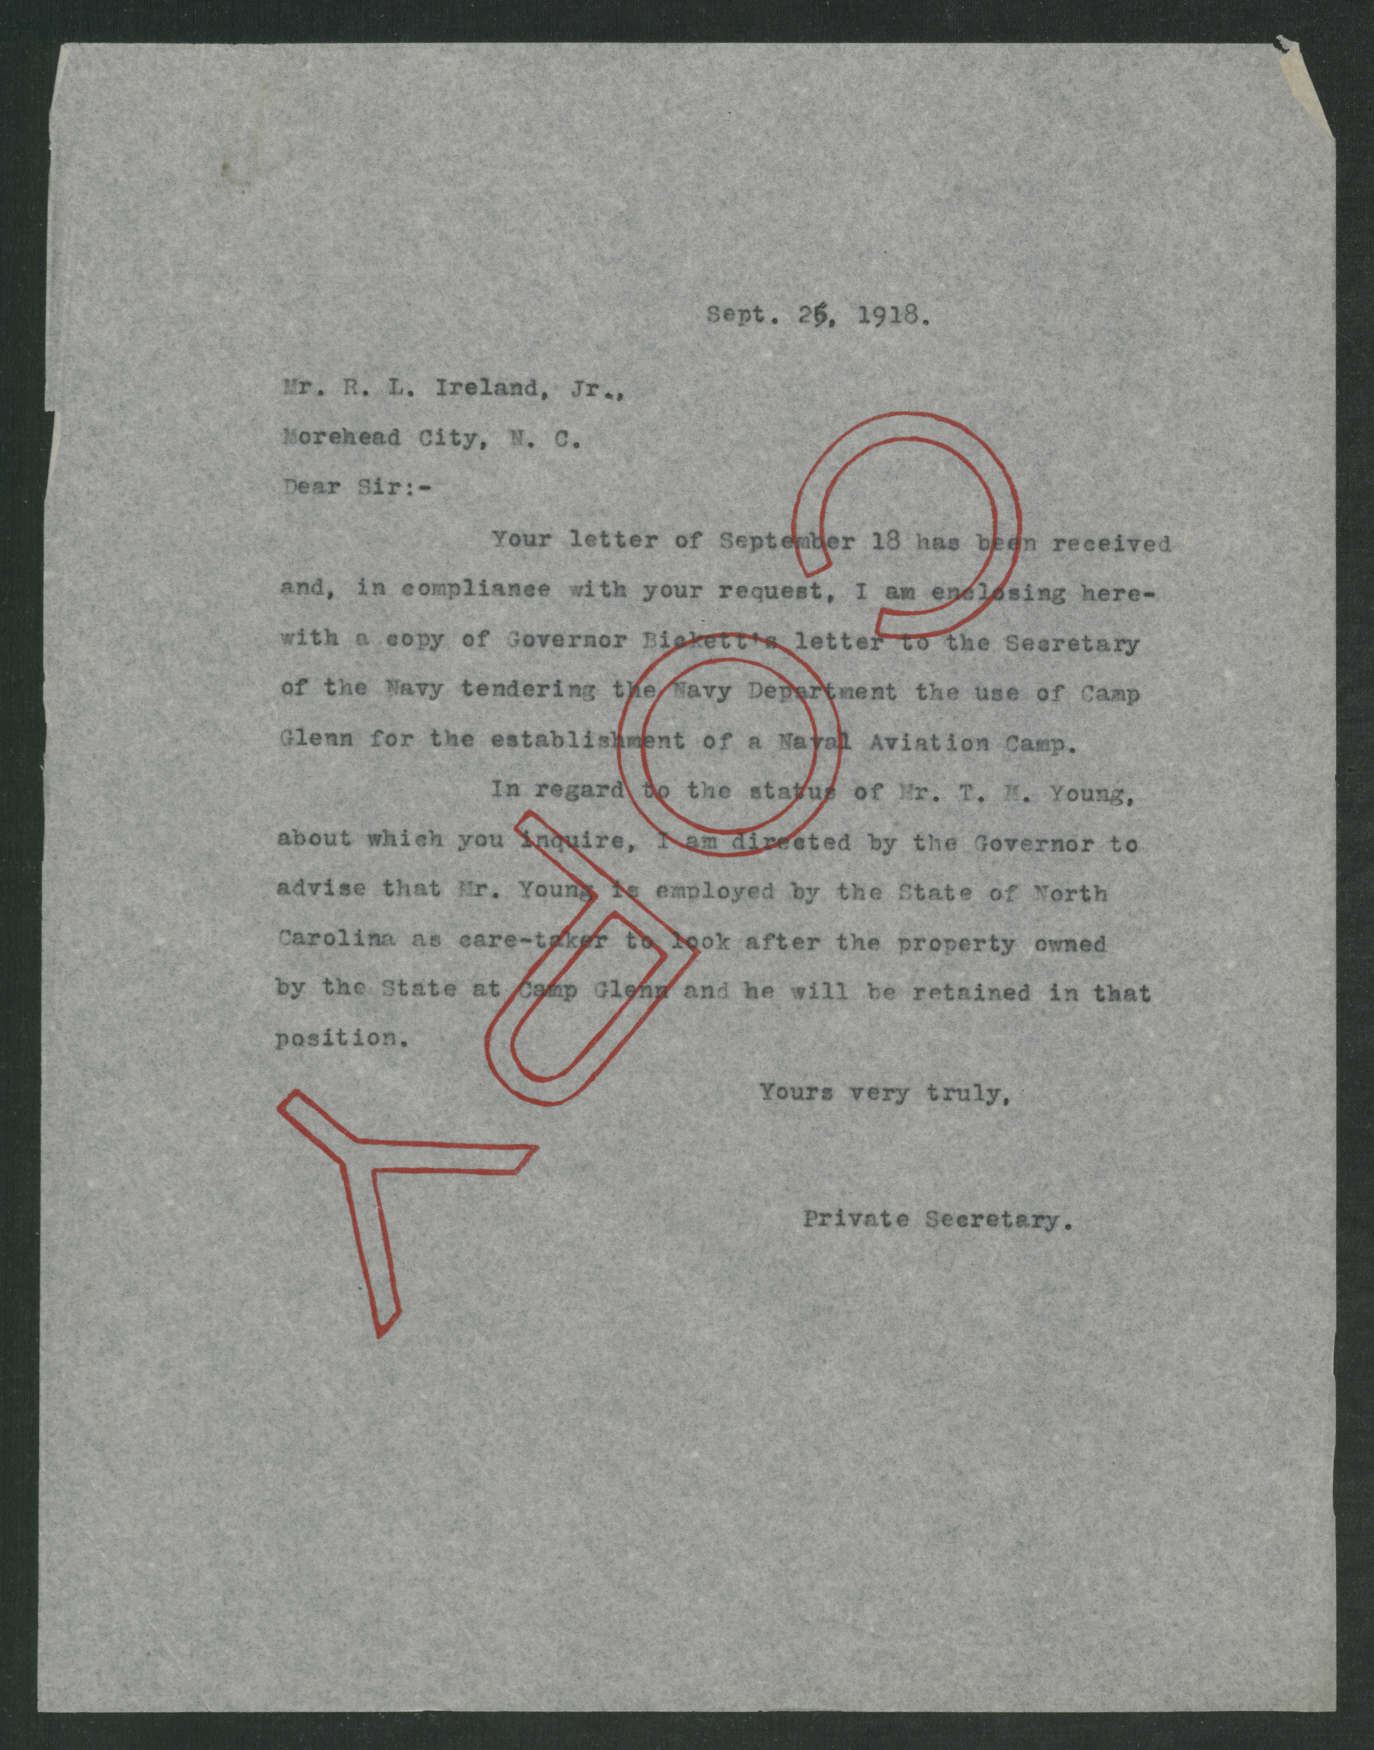 Letter from Santford Martin to R. L. Ireland, Jr., September 26, 1918